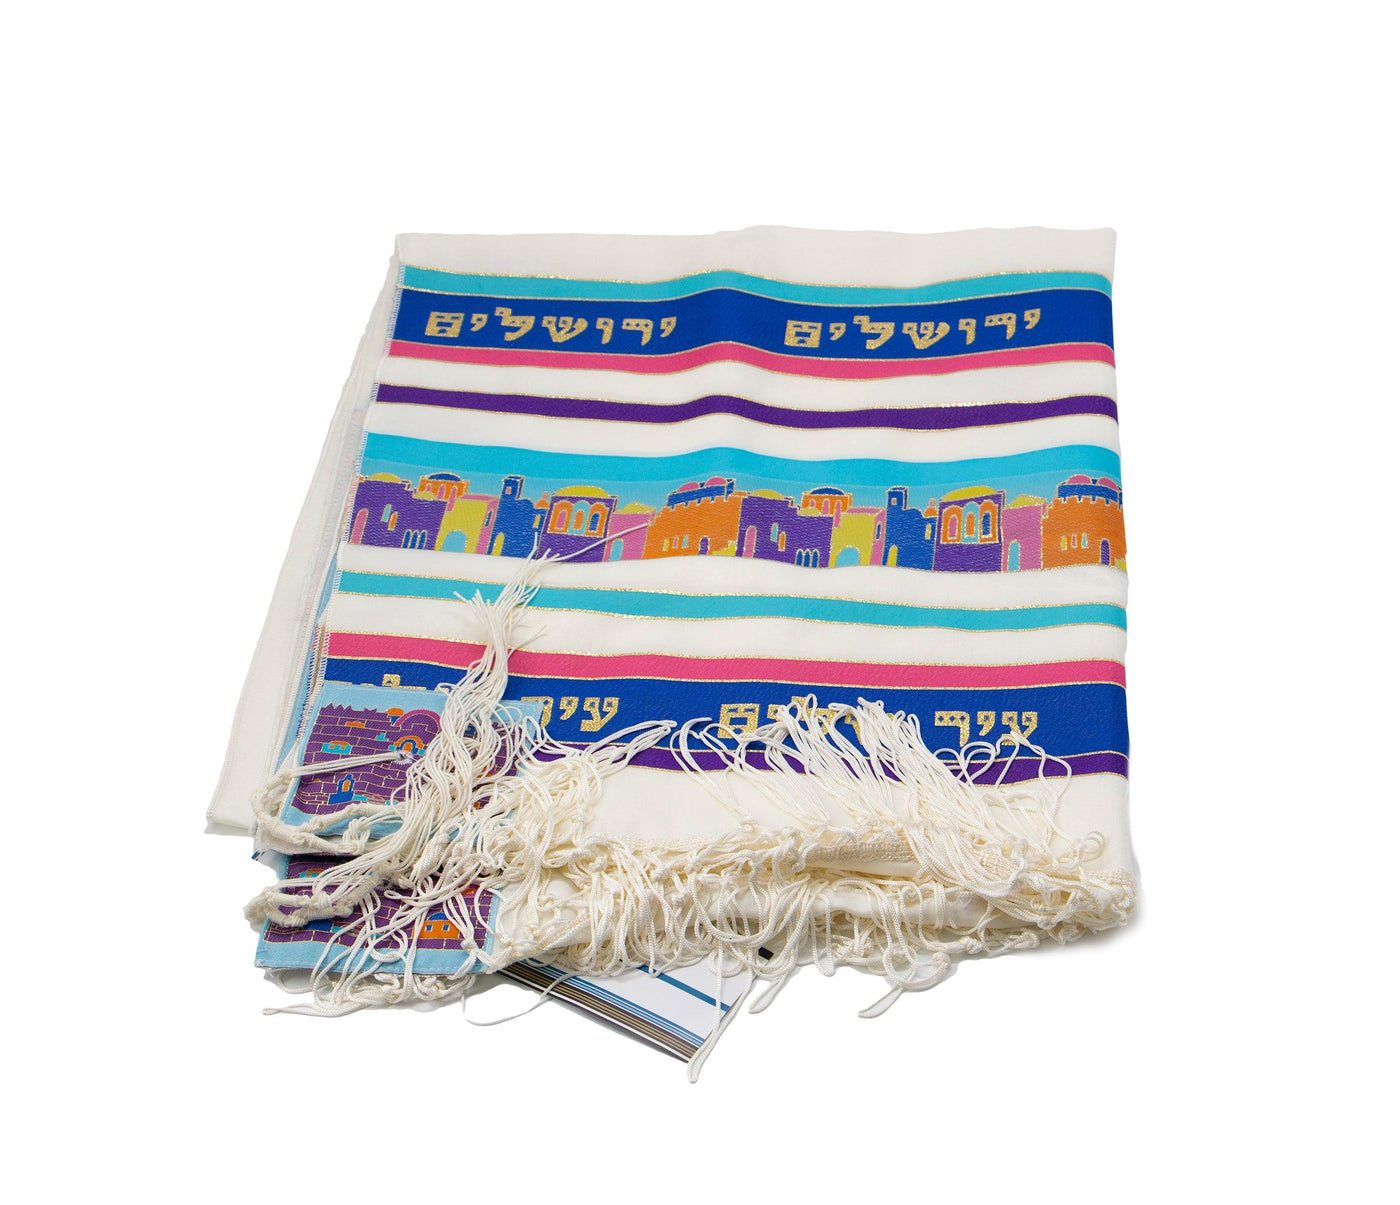 Medium Jerusalem Tallit Prayer Shawl New Wool Acrylic Blues & White Model Old City - Spring Nahal